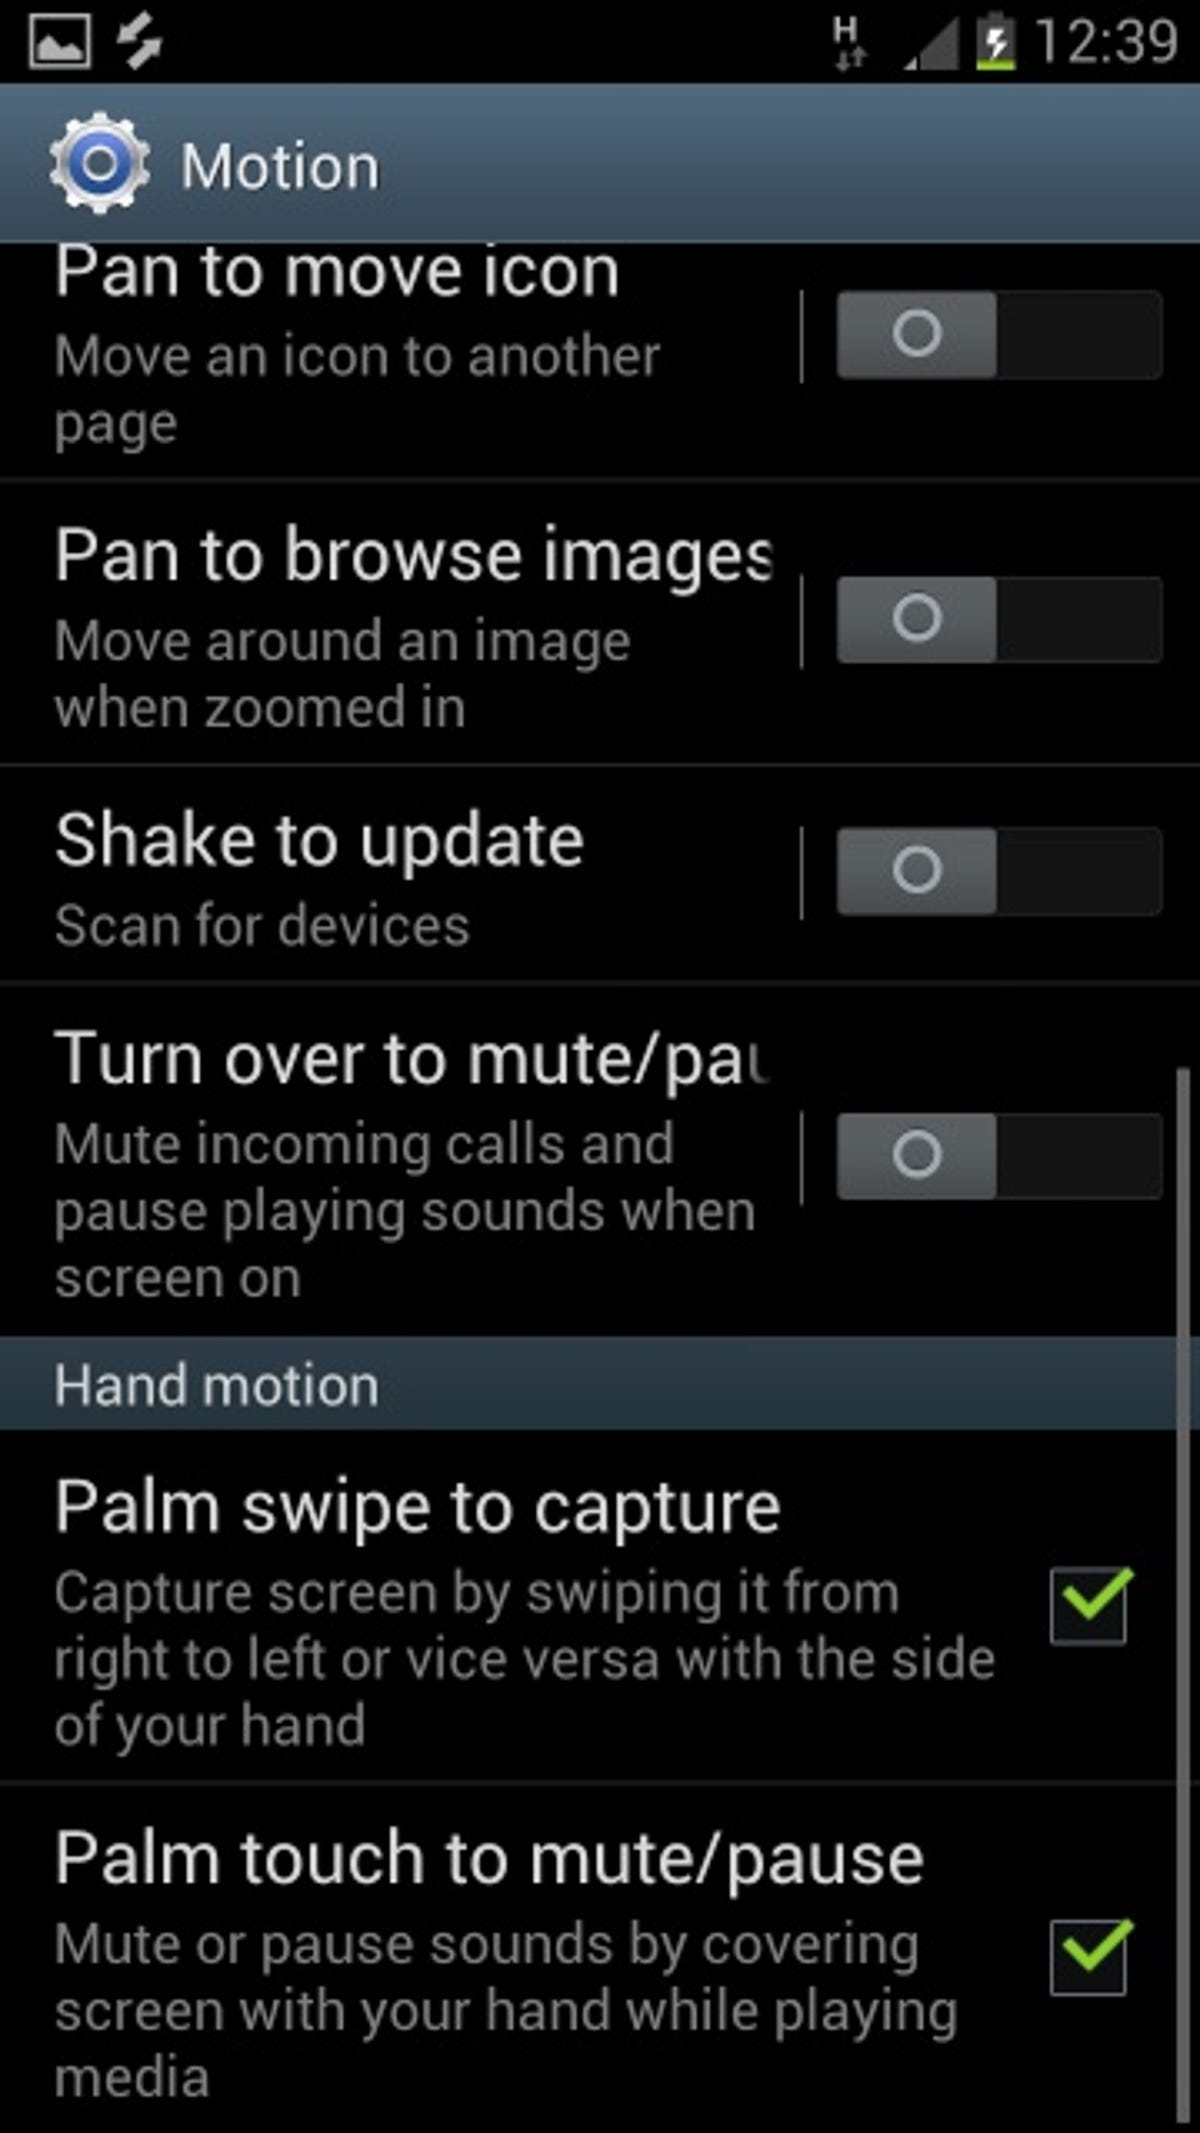 Samsung Galaxy S3 motion settings 2